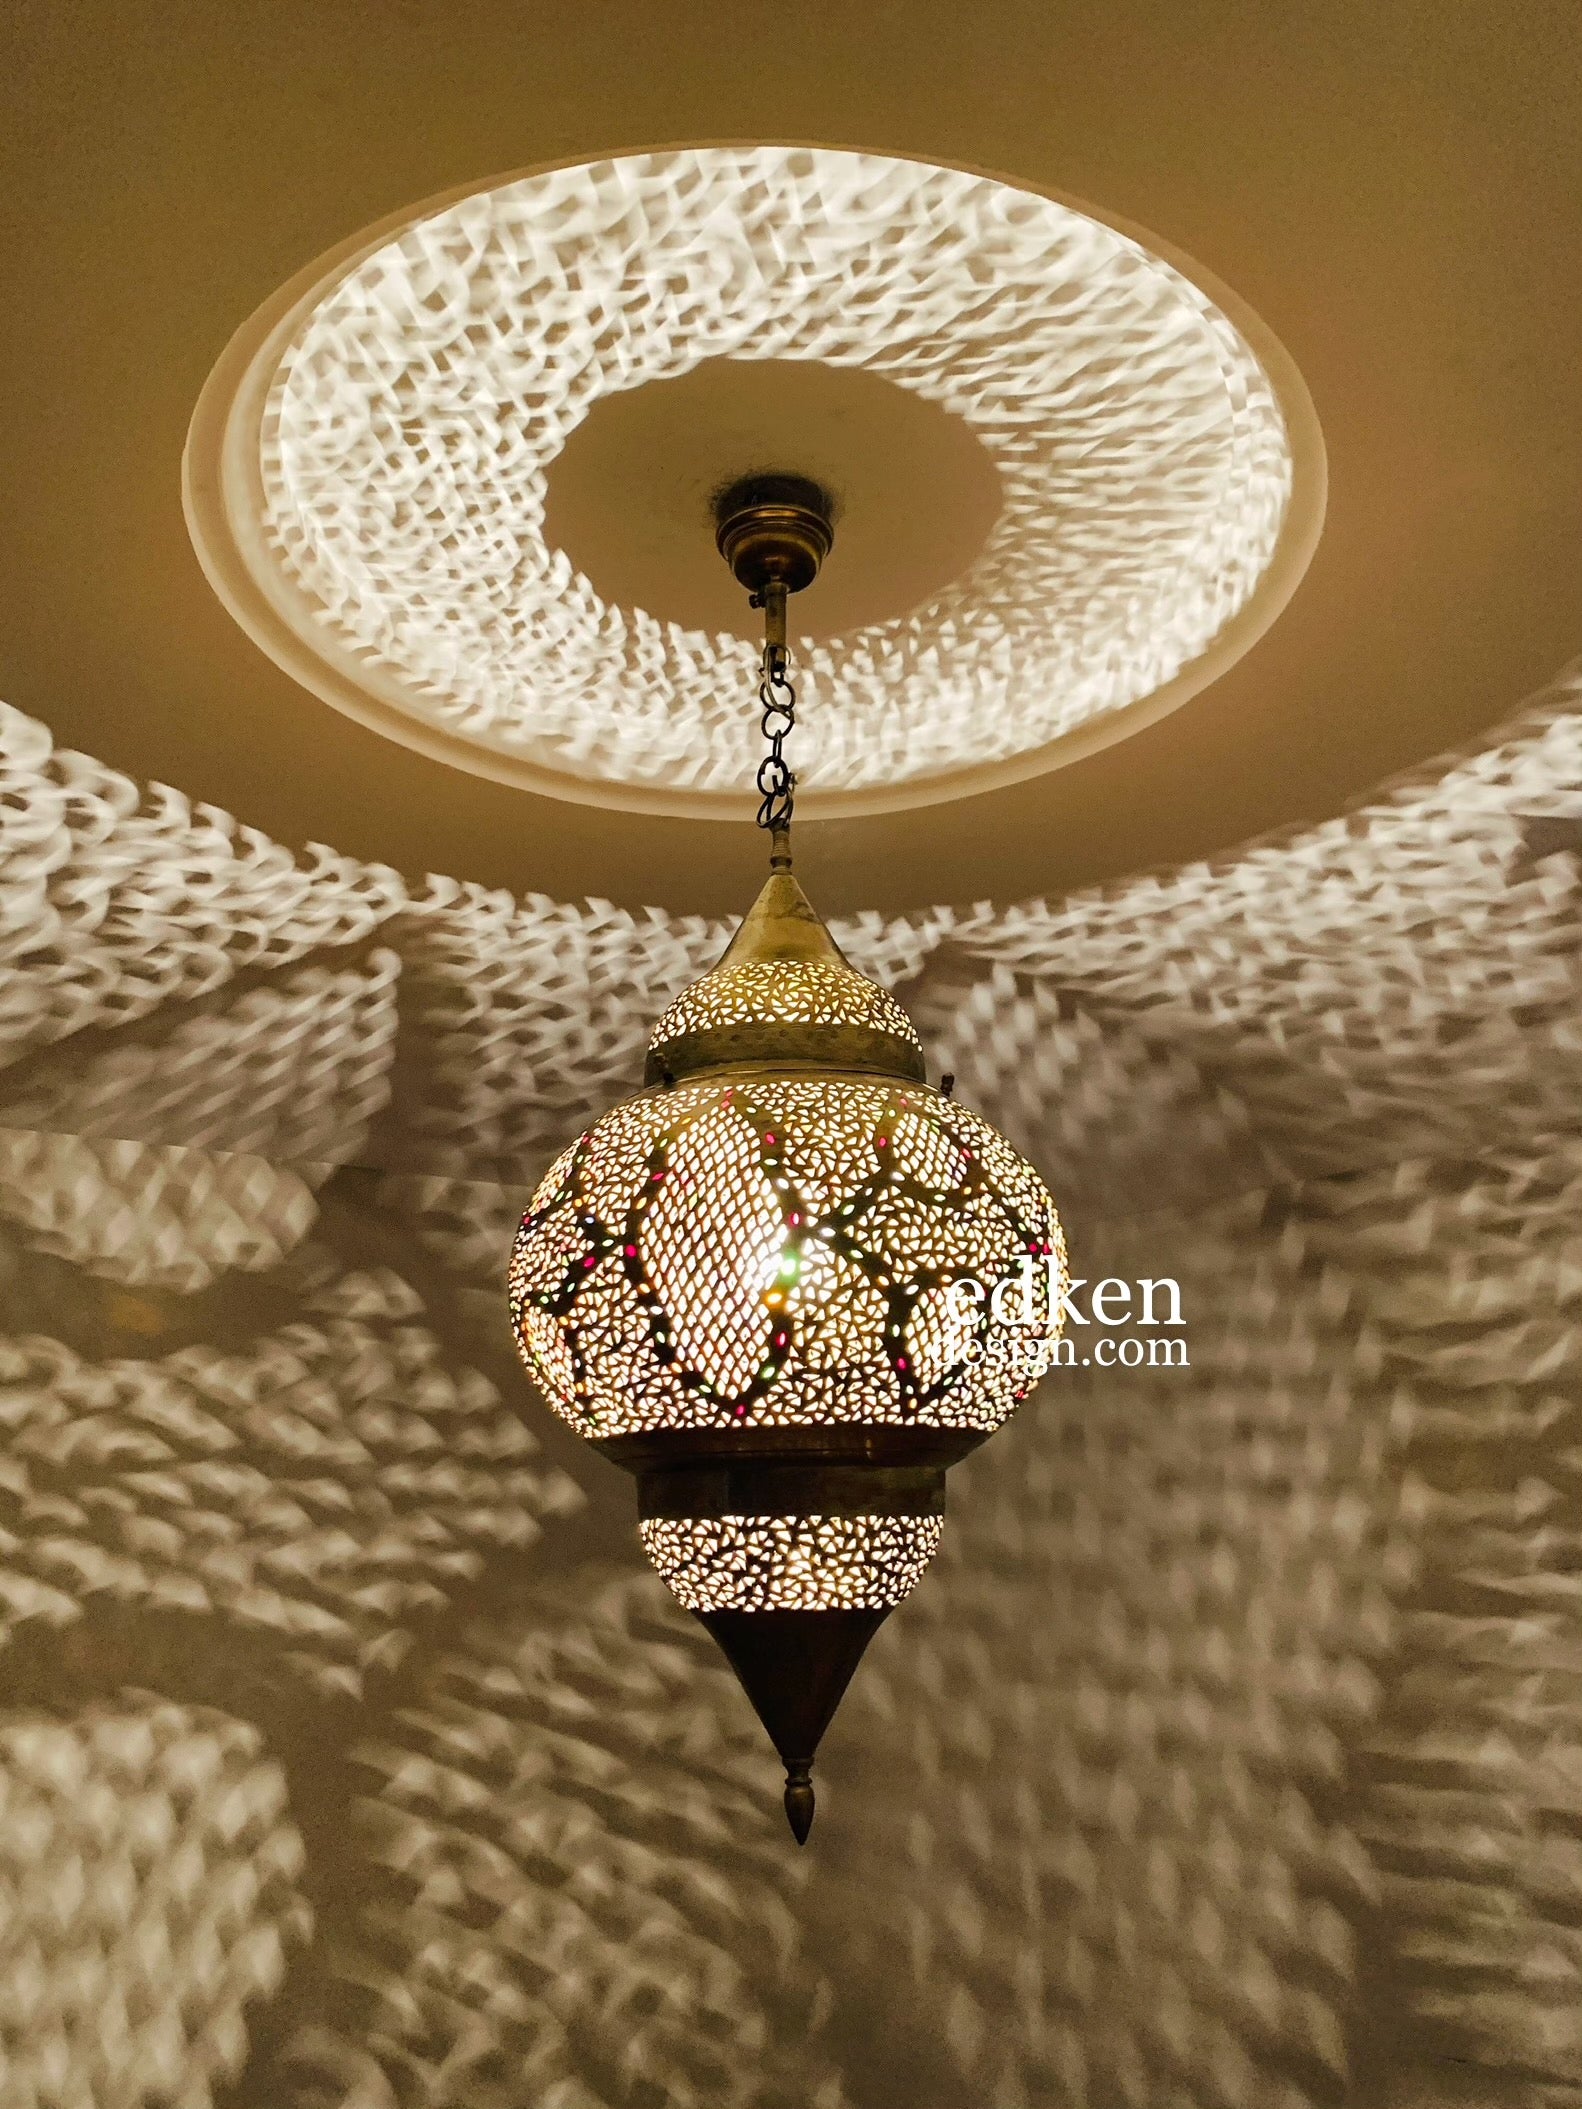 EDKEN LIGHTS - Morocco Ceiling Lamp Shades Fixture brass Morocco Chandelier